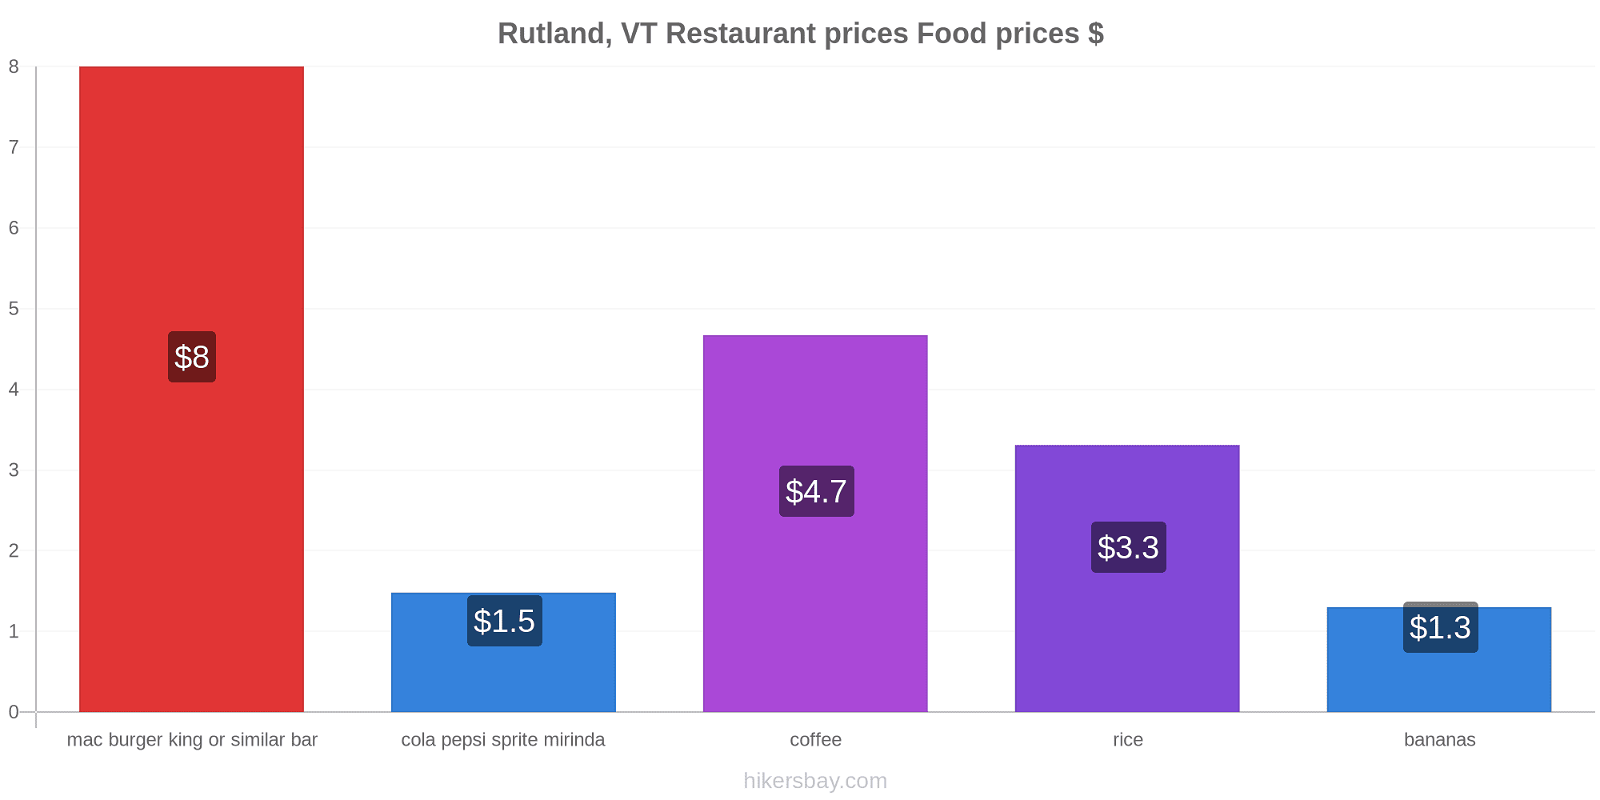 Rutland, VT price changes hikersbay.com